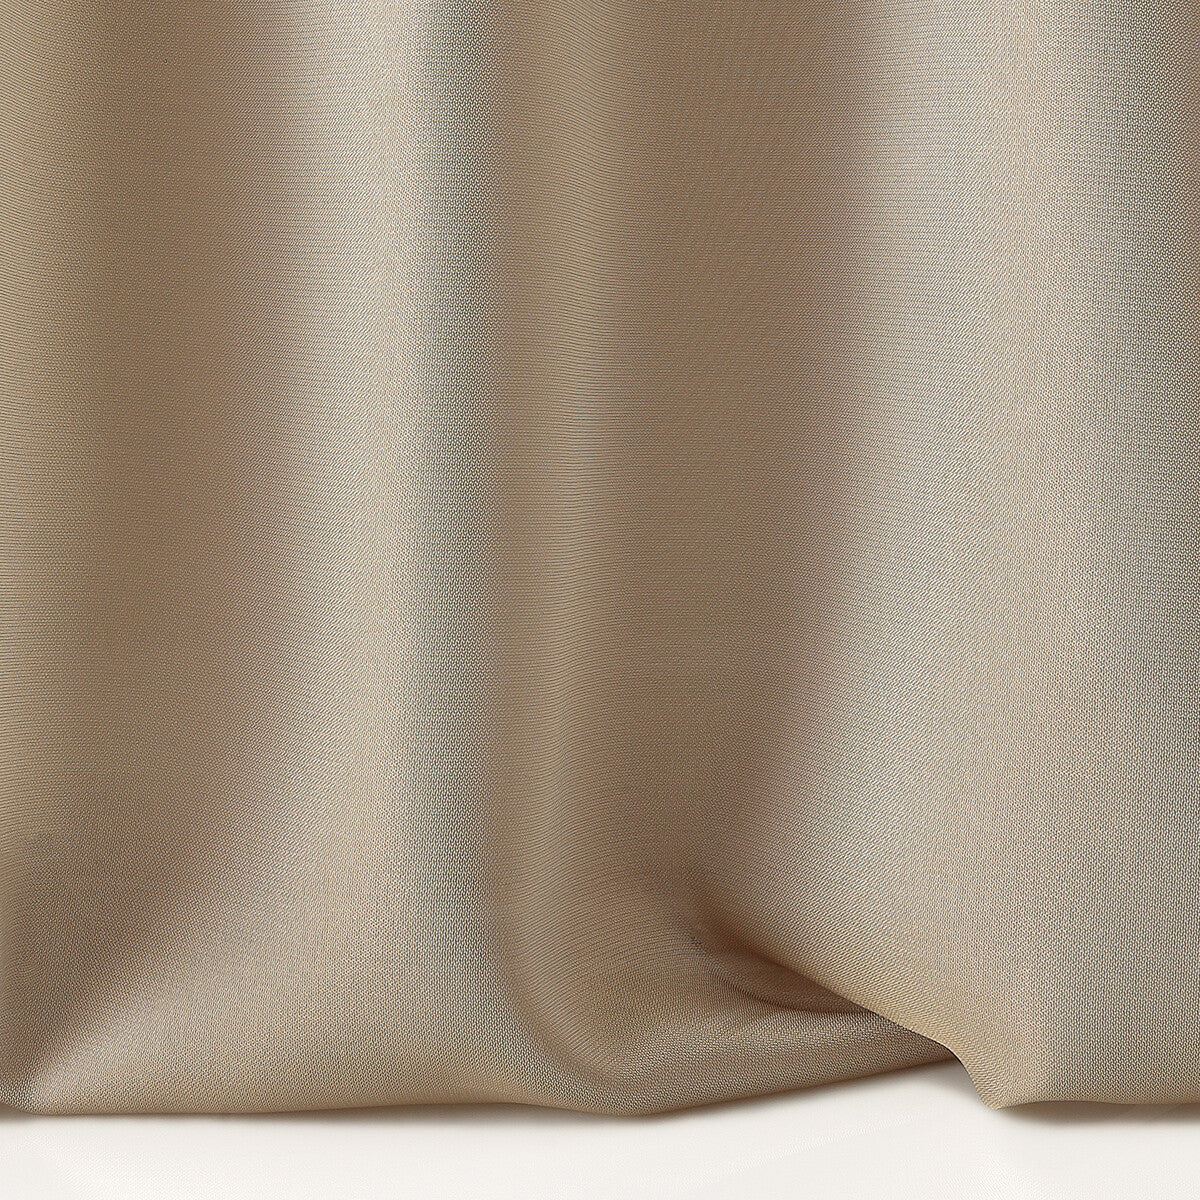 Kravet Design fabric in sonnet-1 color - pattern SONNET.01.0 - by Kravet Design in the Lizzo collection